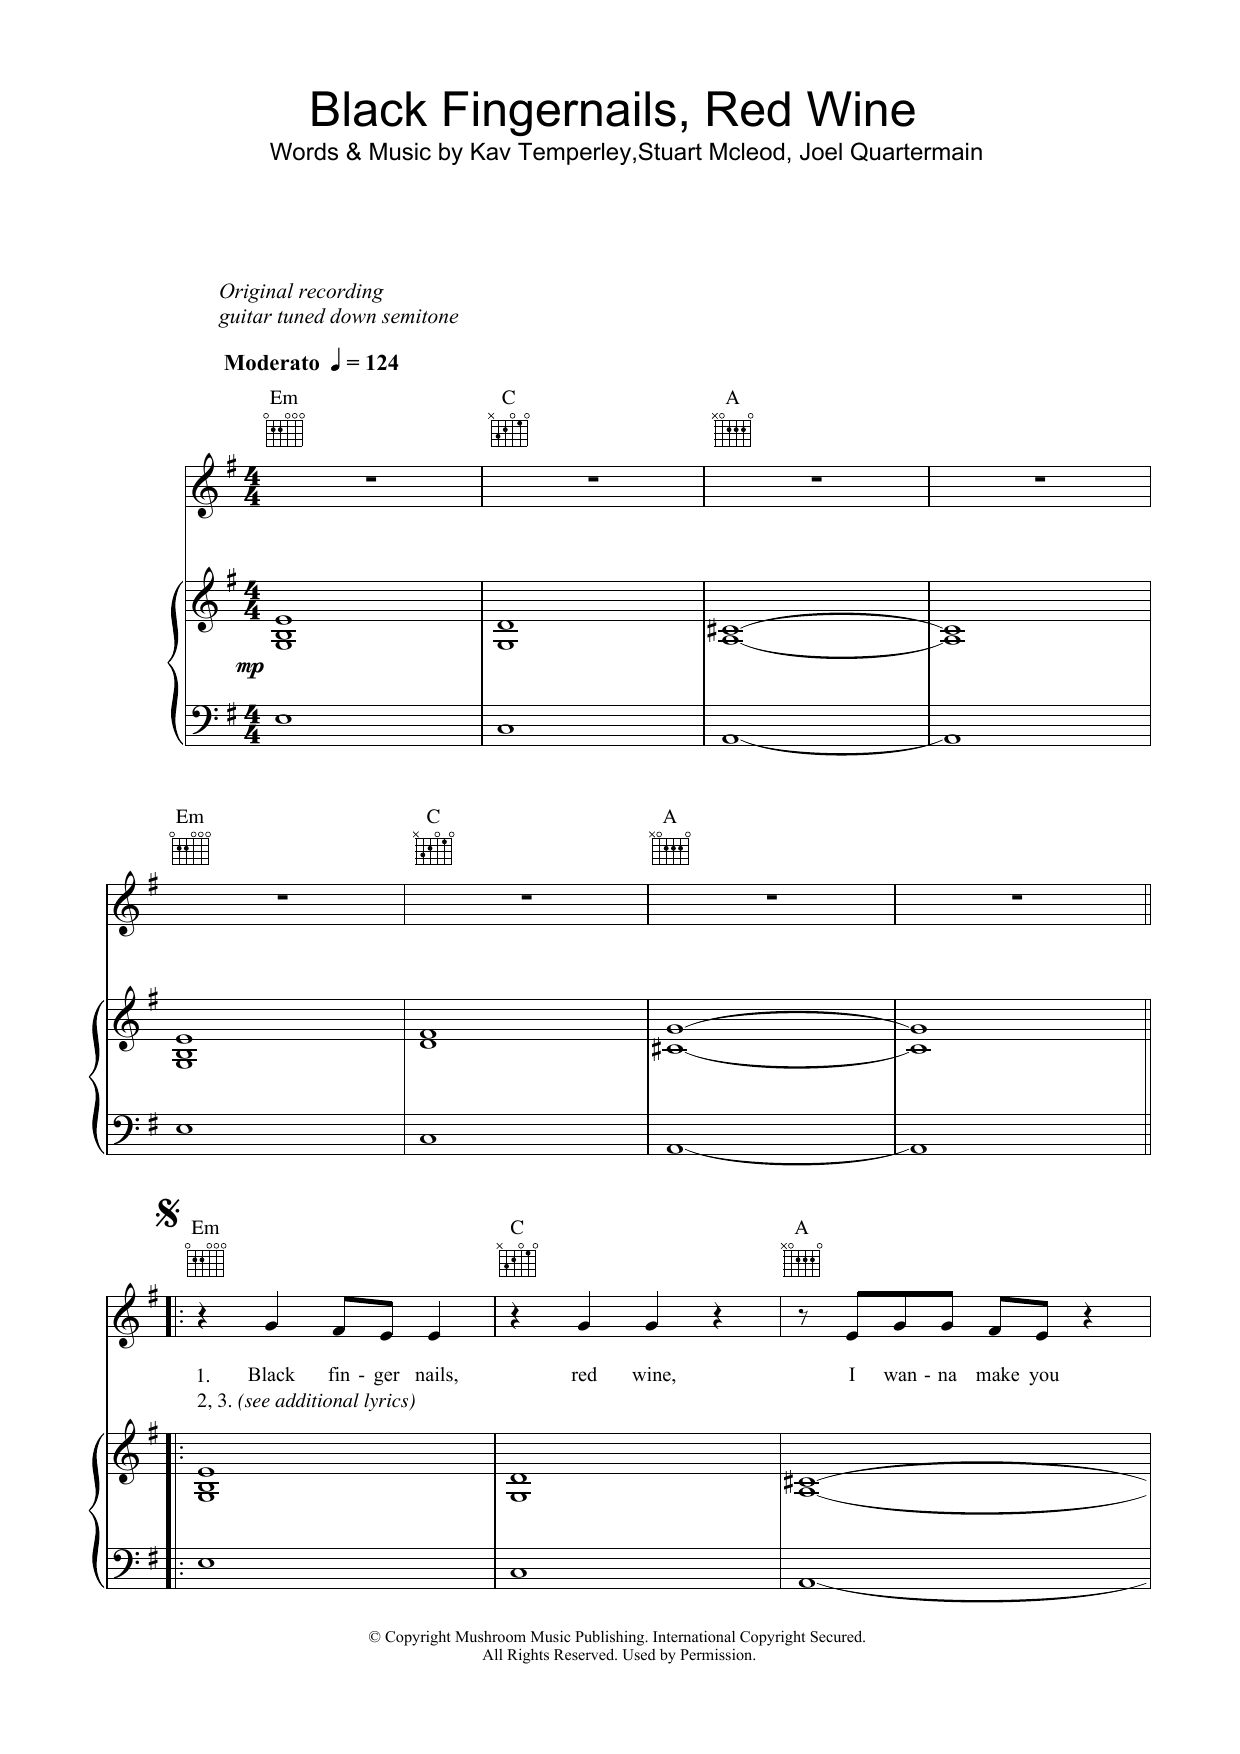 Eskimo Joe Black Fingernails, Red Wine Sheet Music Notes & Chords for Beginner Piano - Download or Print PDF